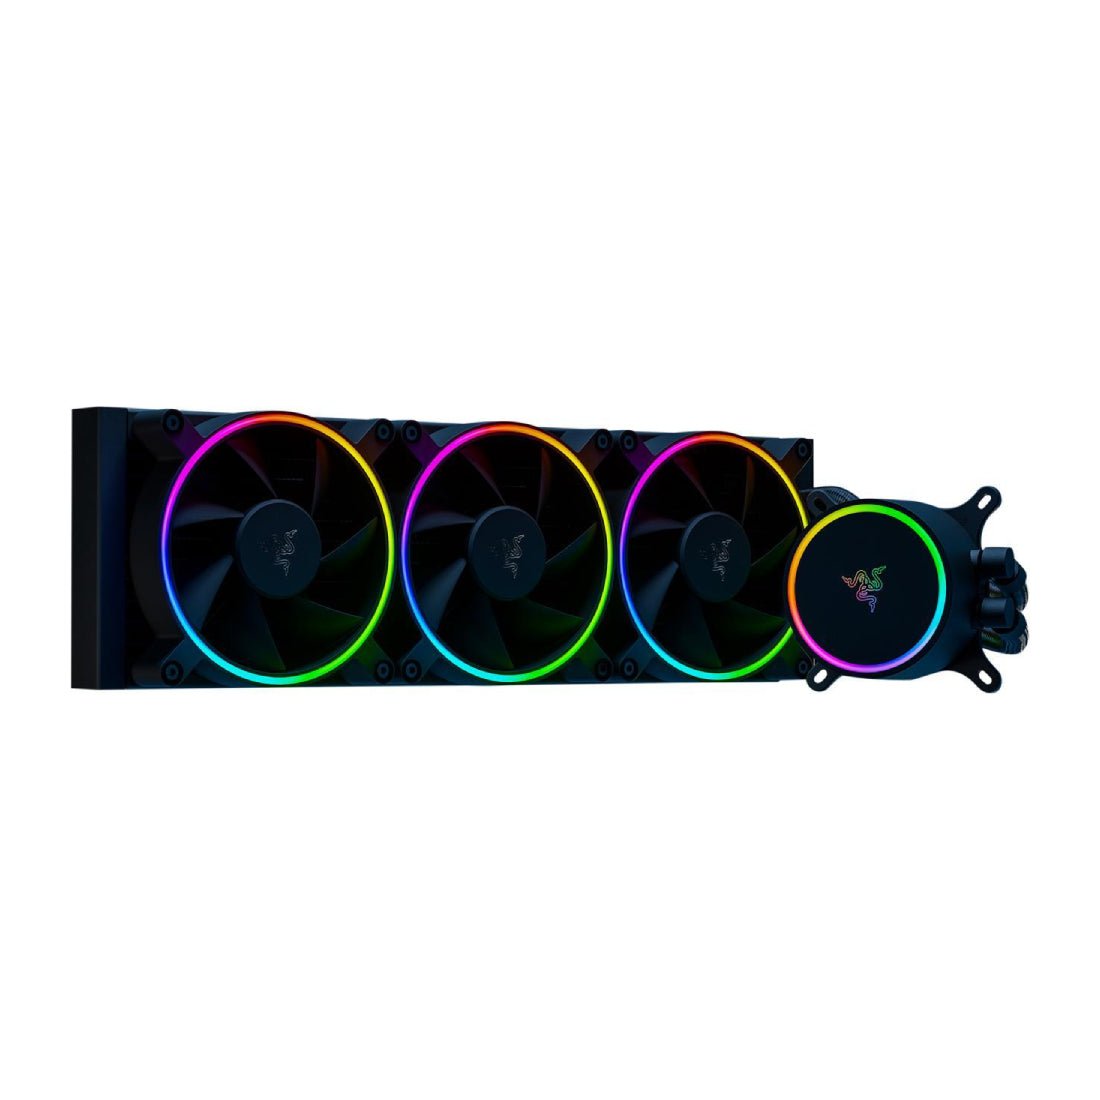 Razer Hanbo Chroma RGB AIO 360mm Liquid Cooler - Store 974 | ستور ٩٧٤